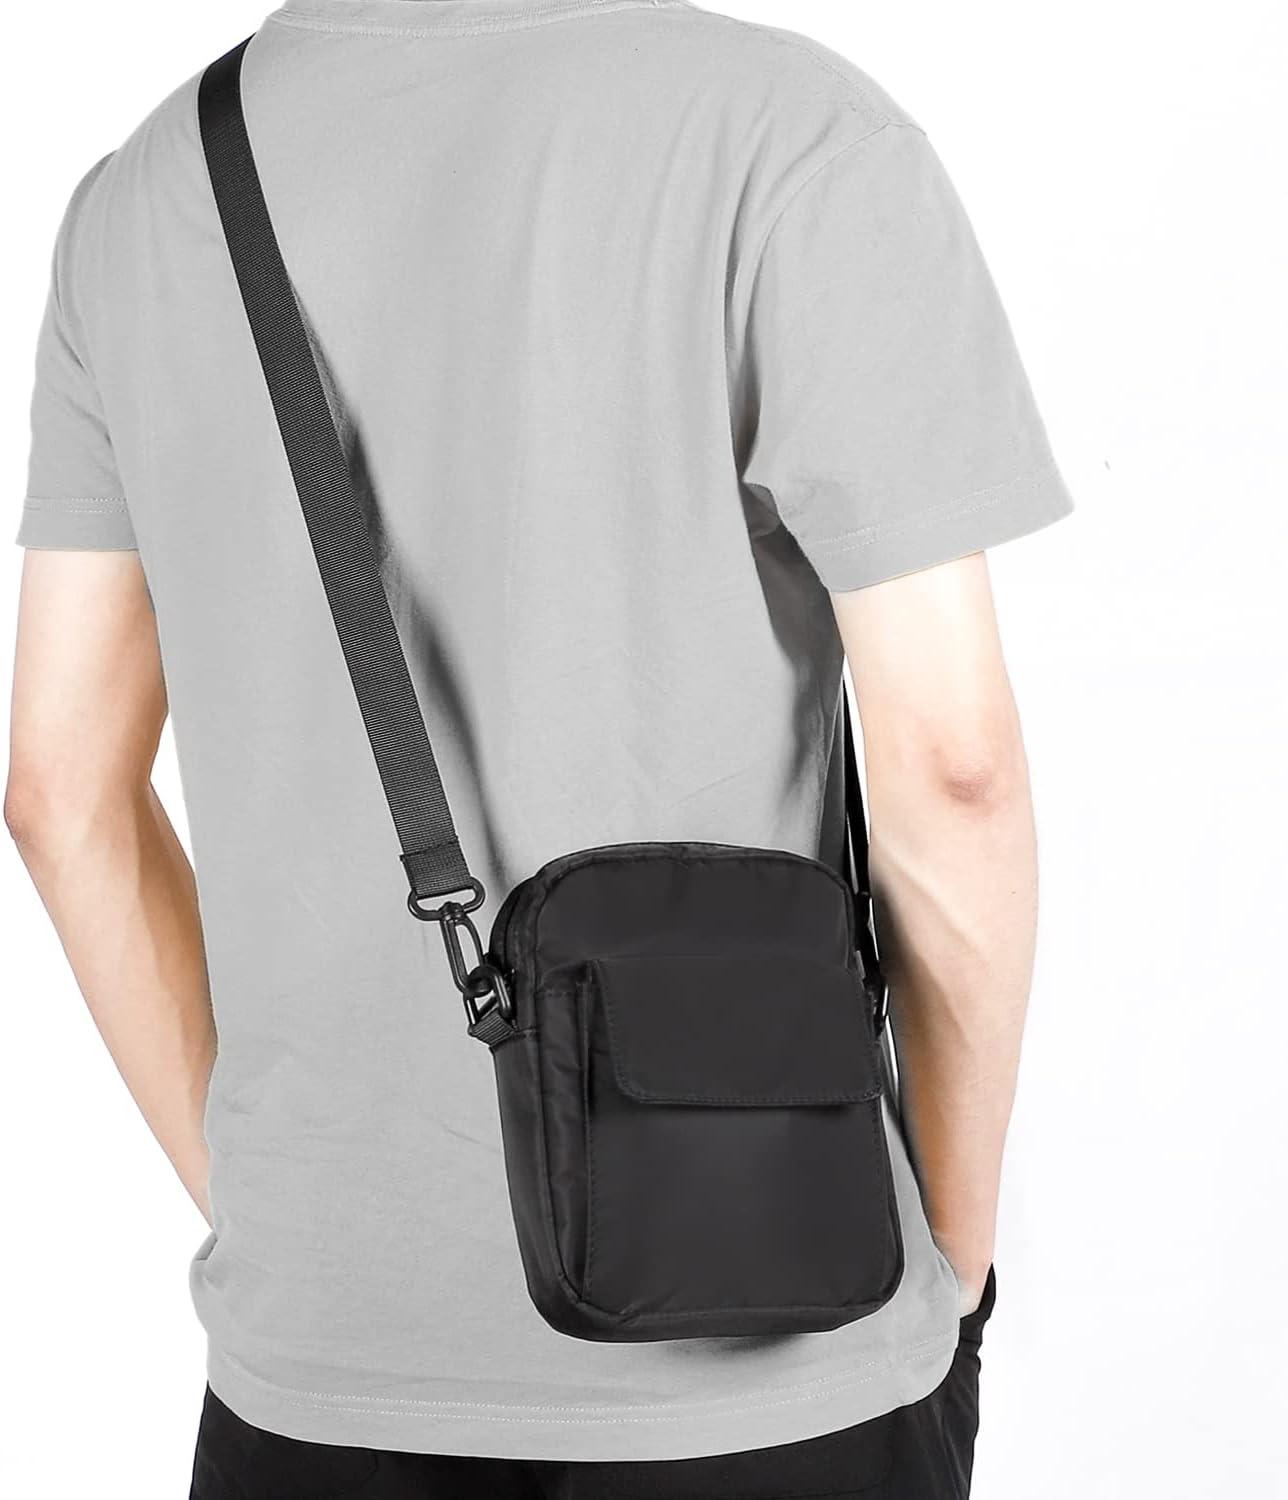 SYCNB Black Small Side Shoulder Bag Crossbody Bag India | Ubuy